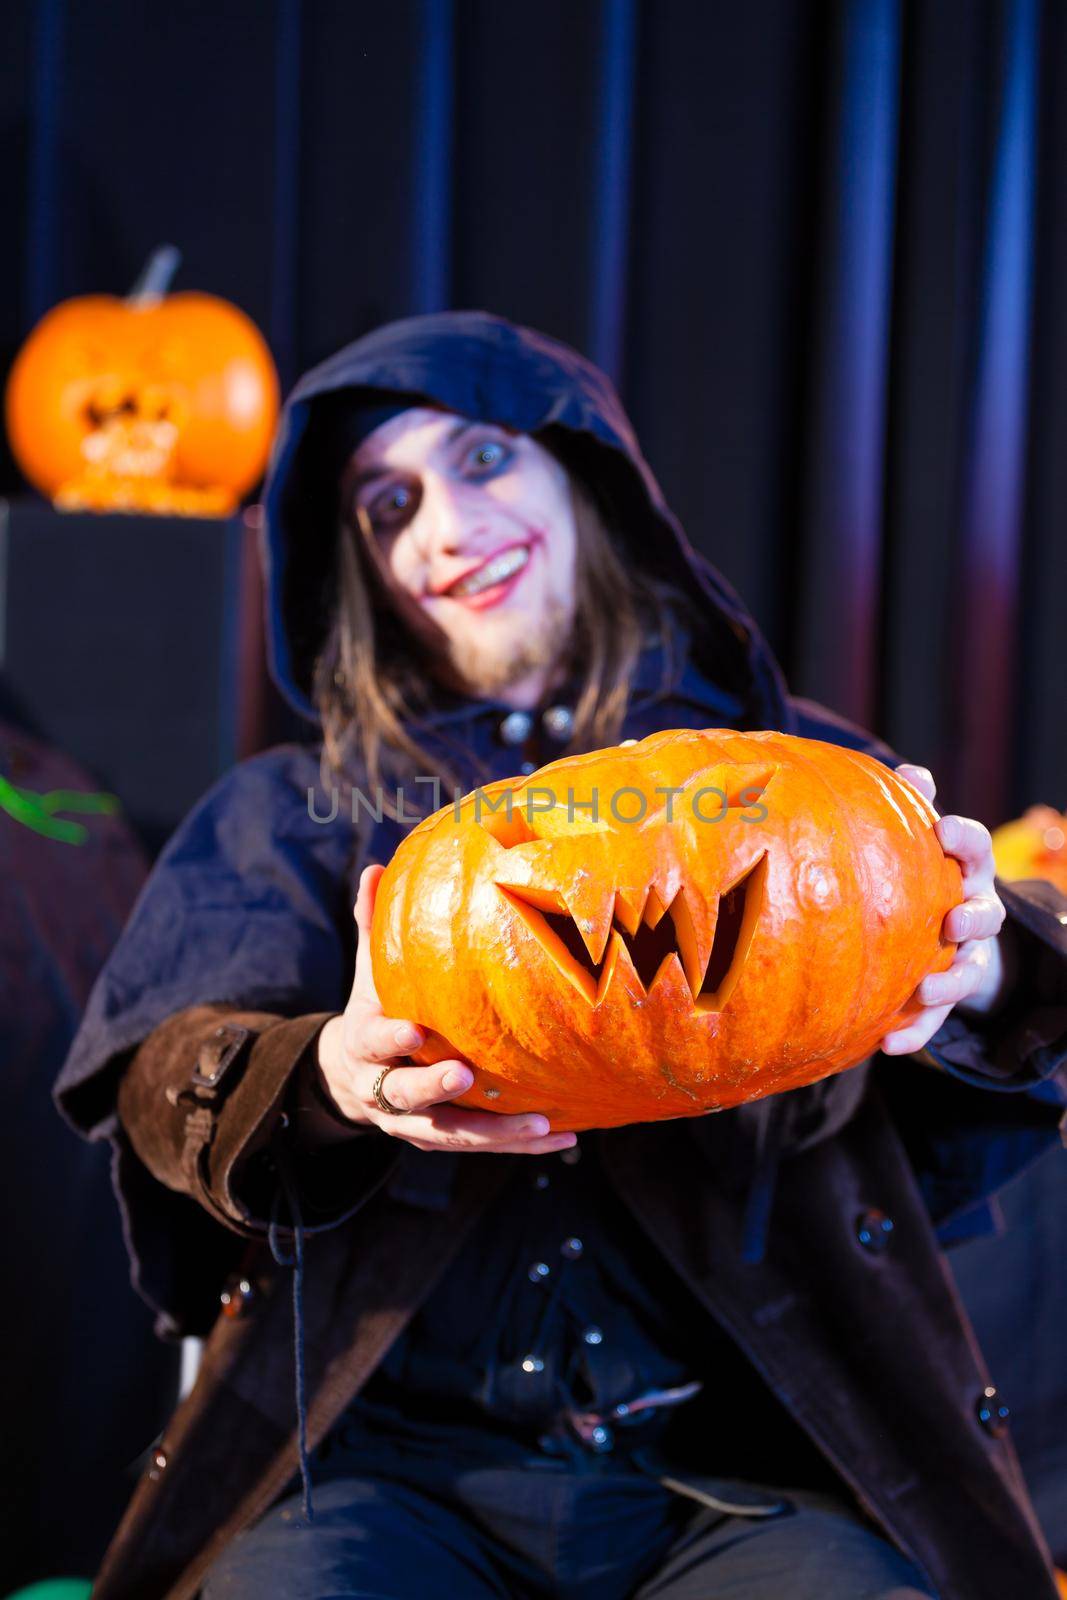 Man in scary Halloween costume holding pumpkin by Kzenon